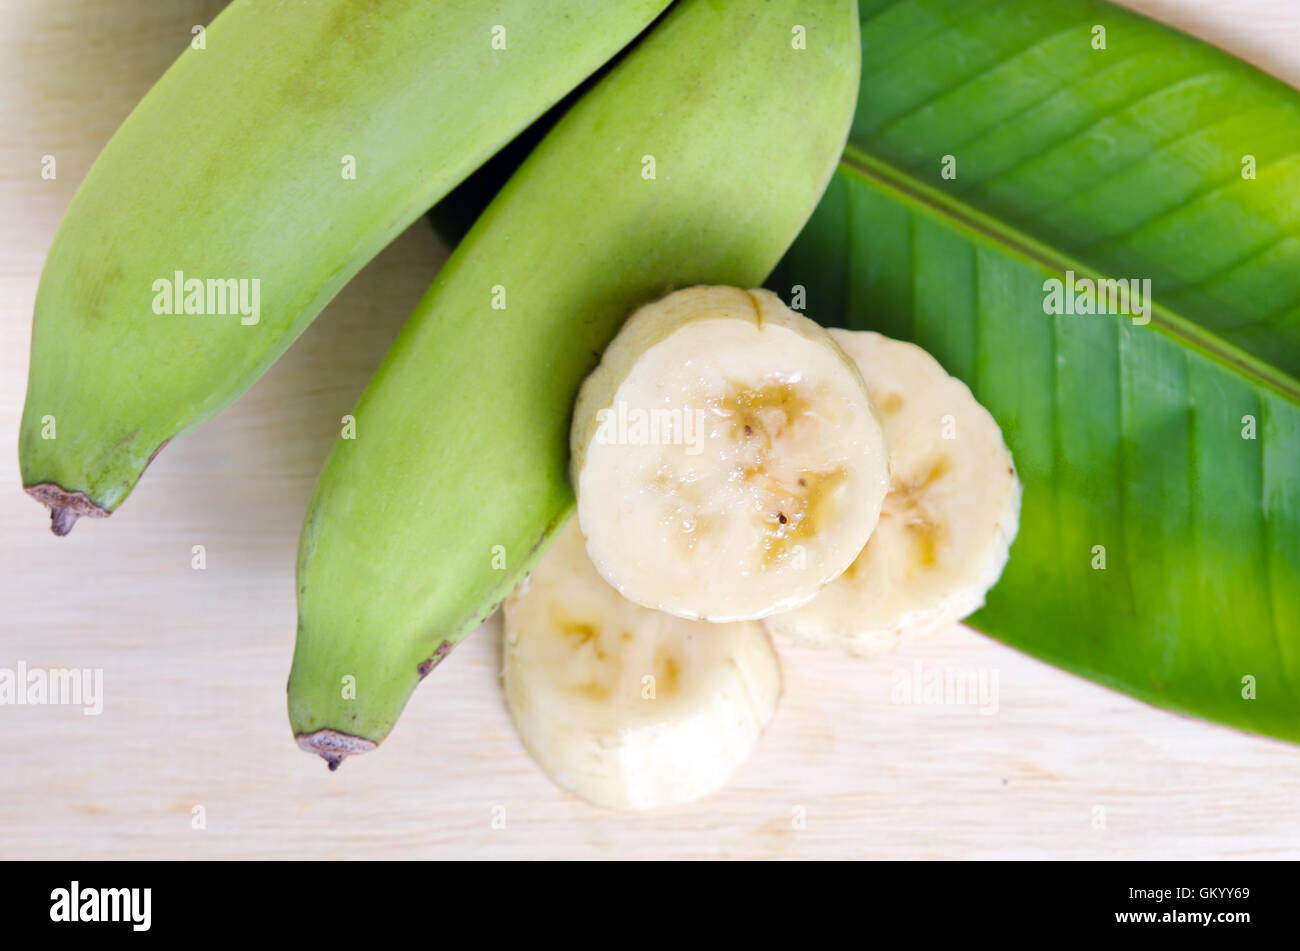 Banana (Other names are Musa banana acuminata, Musa balbisiana, and ...